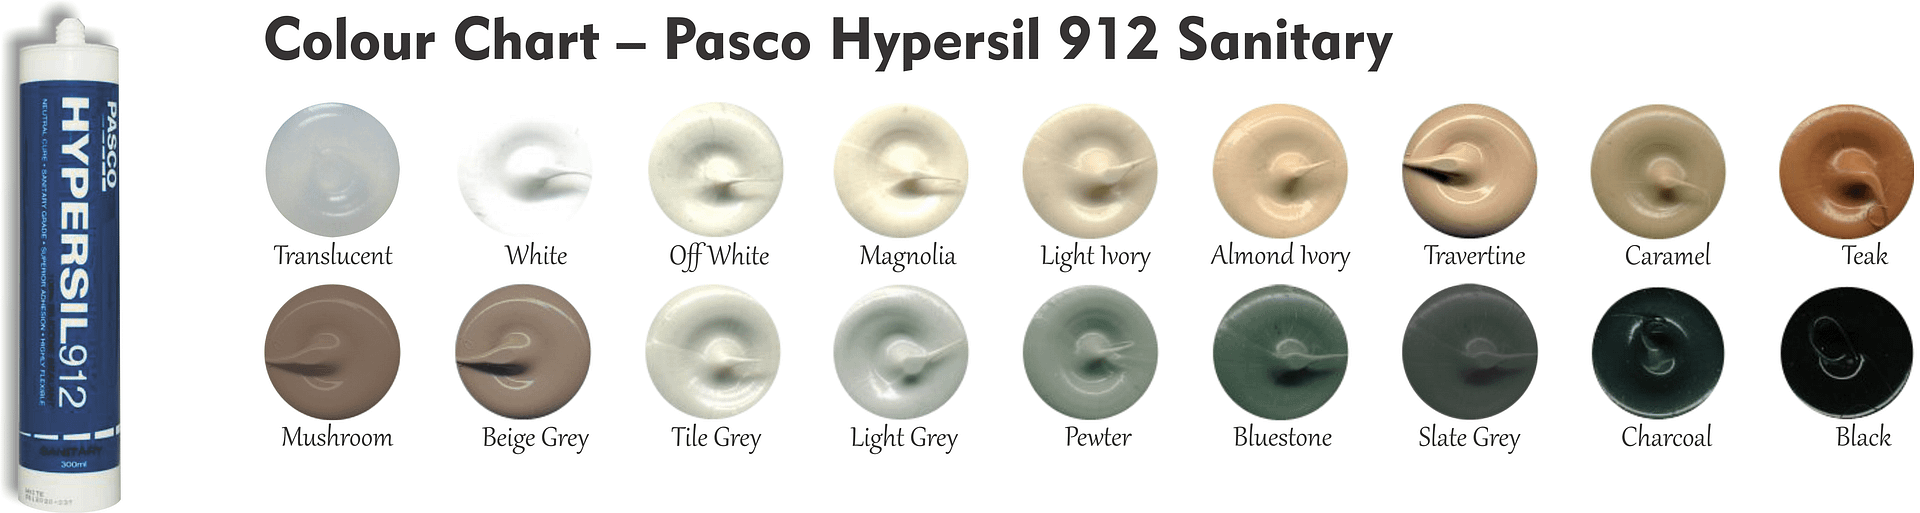 Colour Chart – Pasco Hypersil 912 Sanitary 